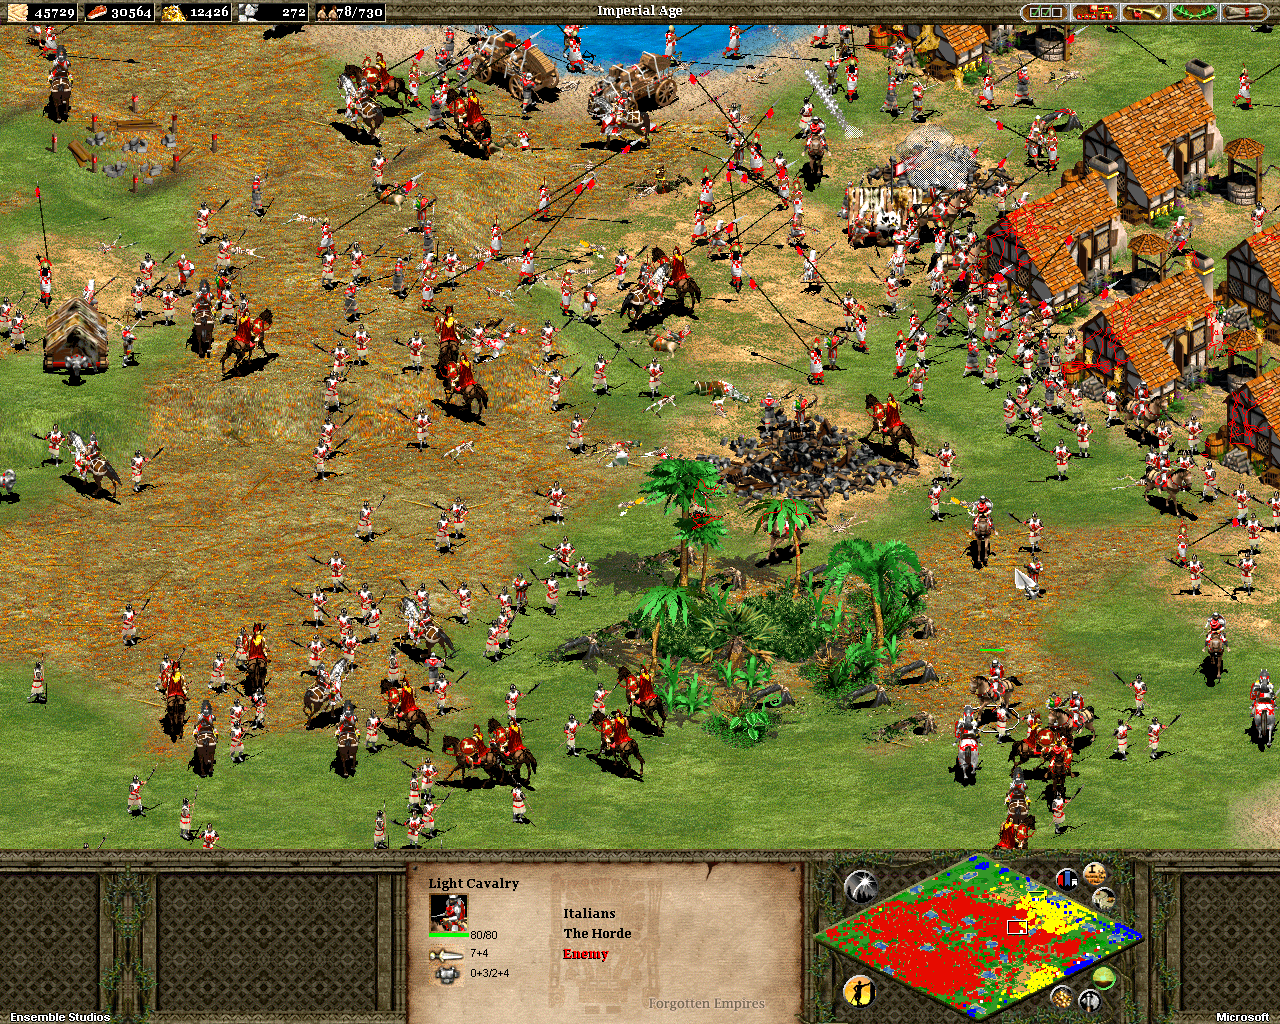 Age Of Empires II: The Forgotten HD wallpapers, Desktop wallpaper - most viewed